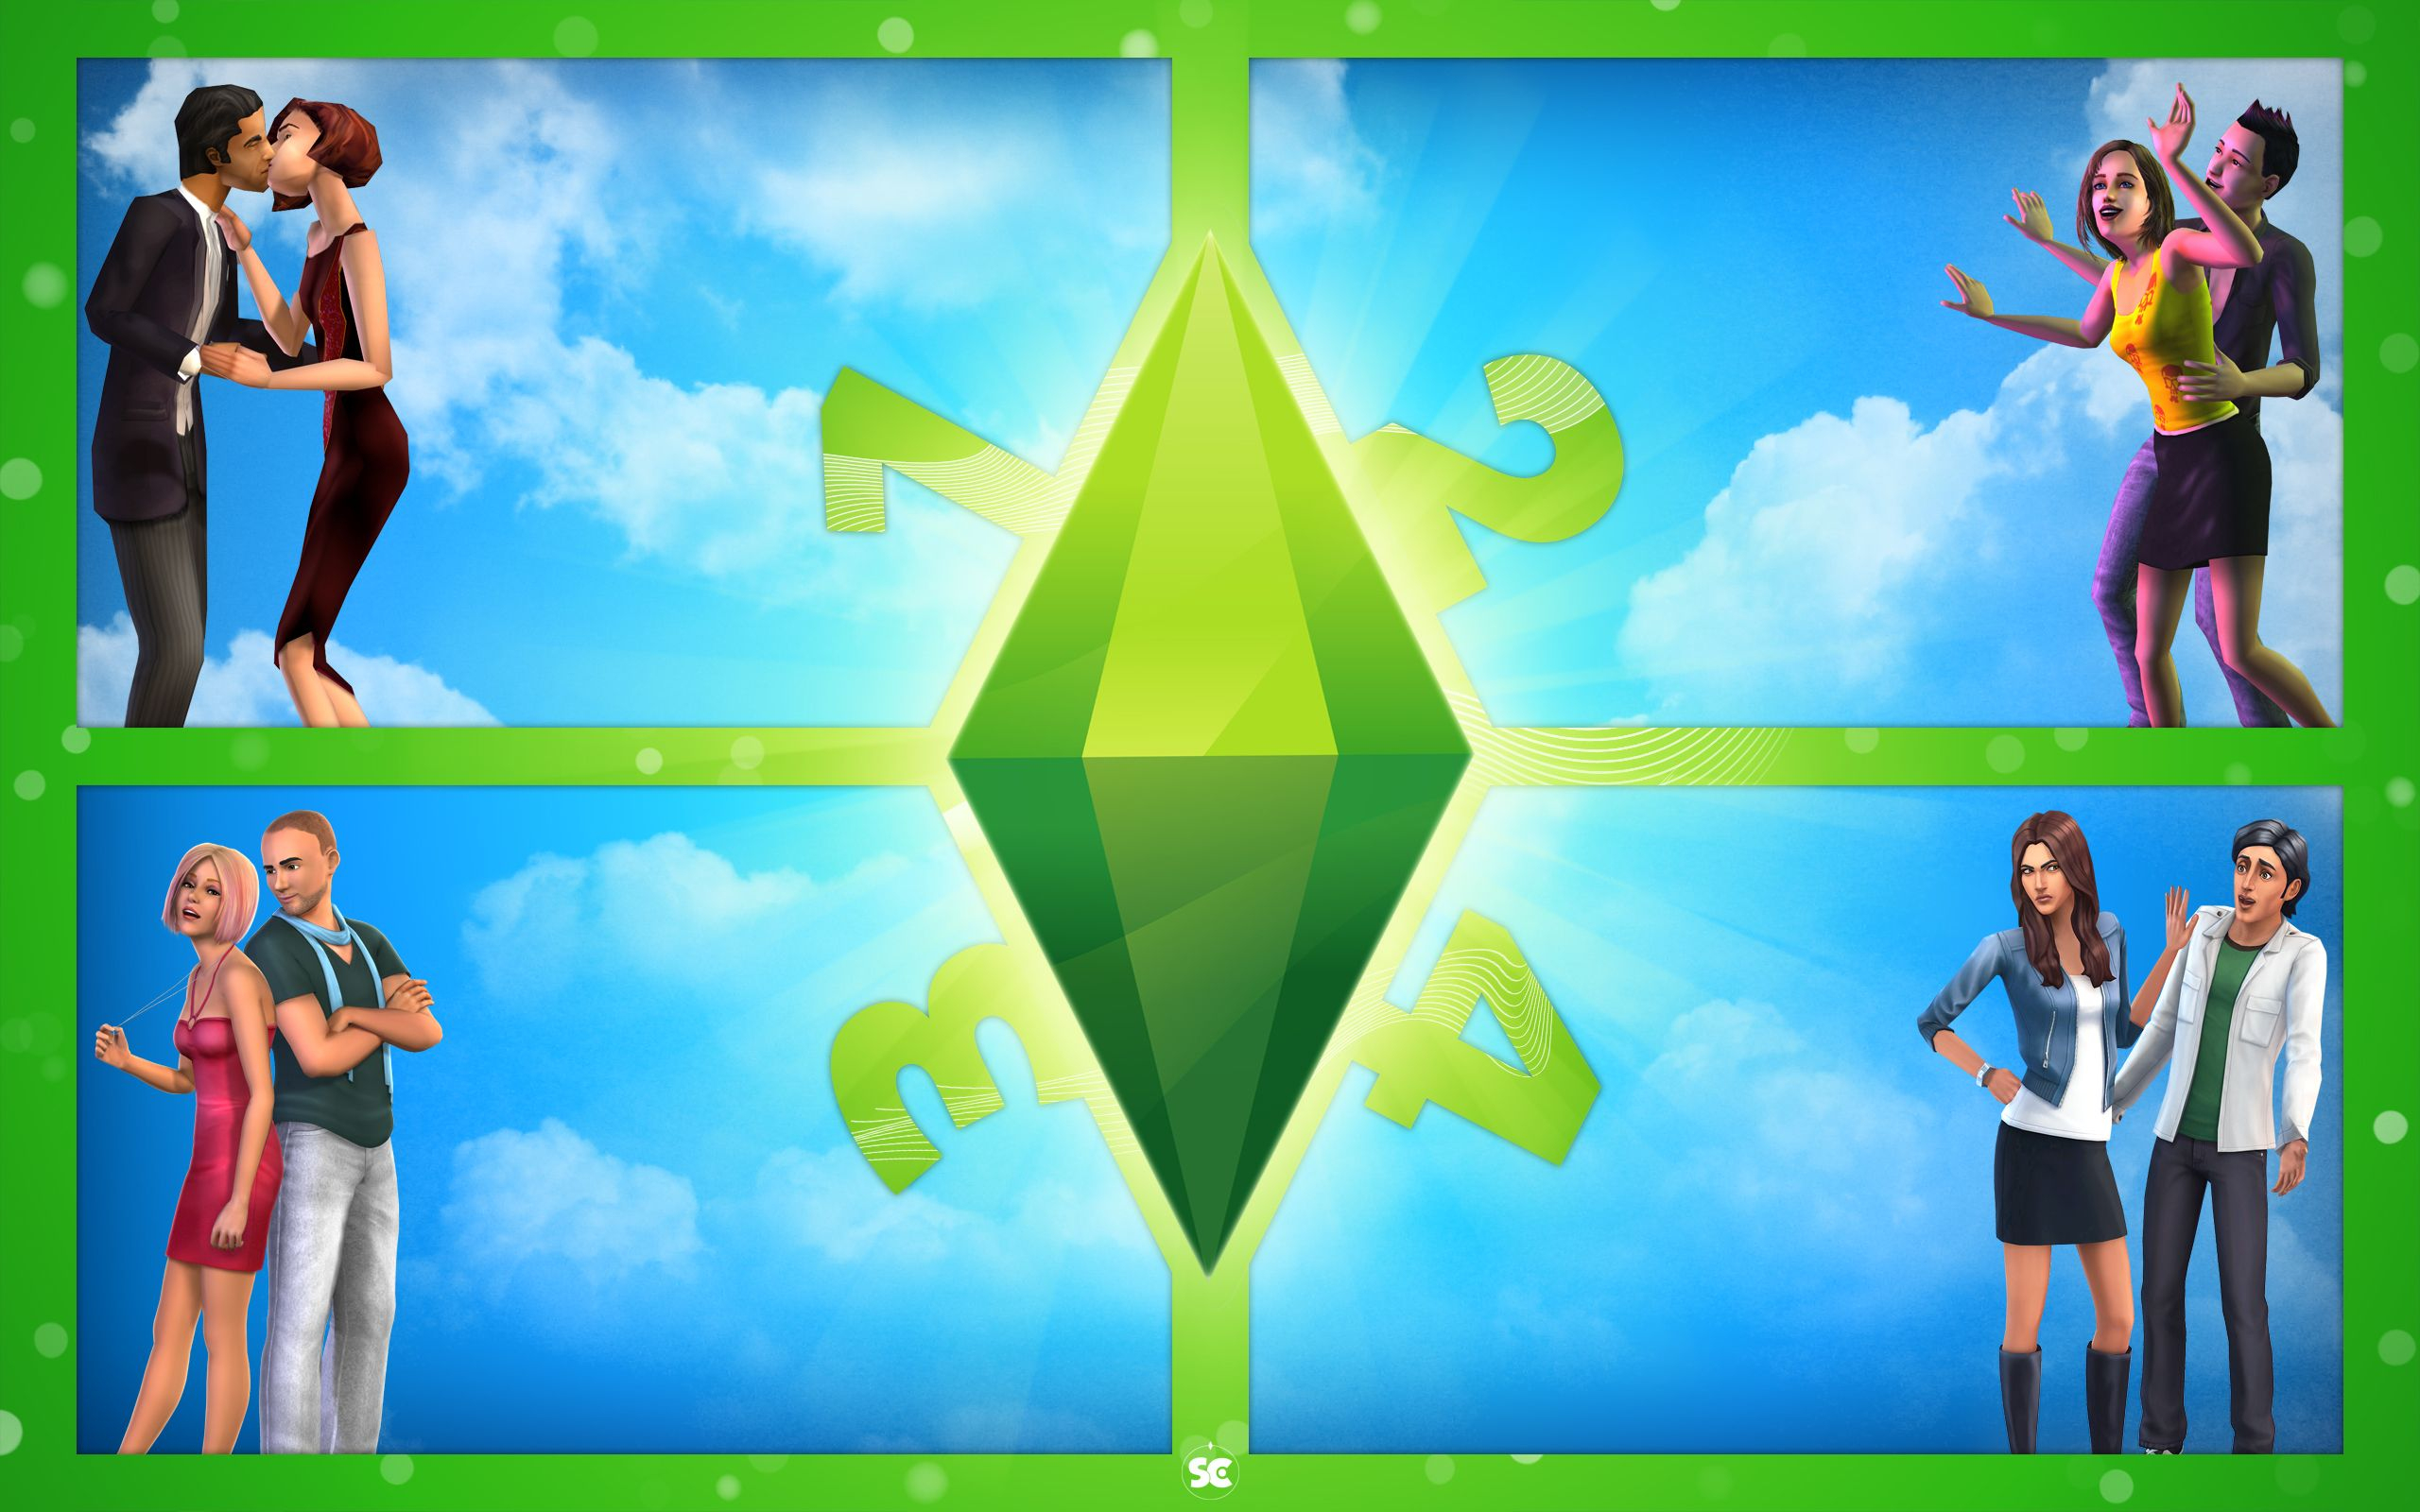 Sims 4 Desktop Wallpapers - Wallpaper Cave concernant Ecran Chargement Sims 4